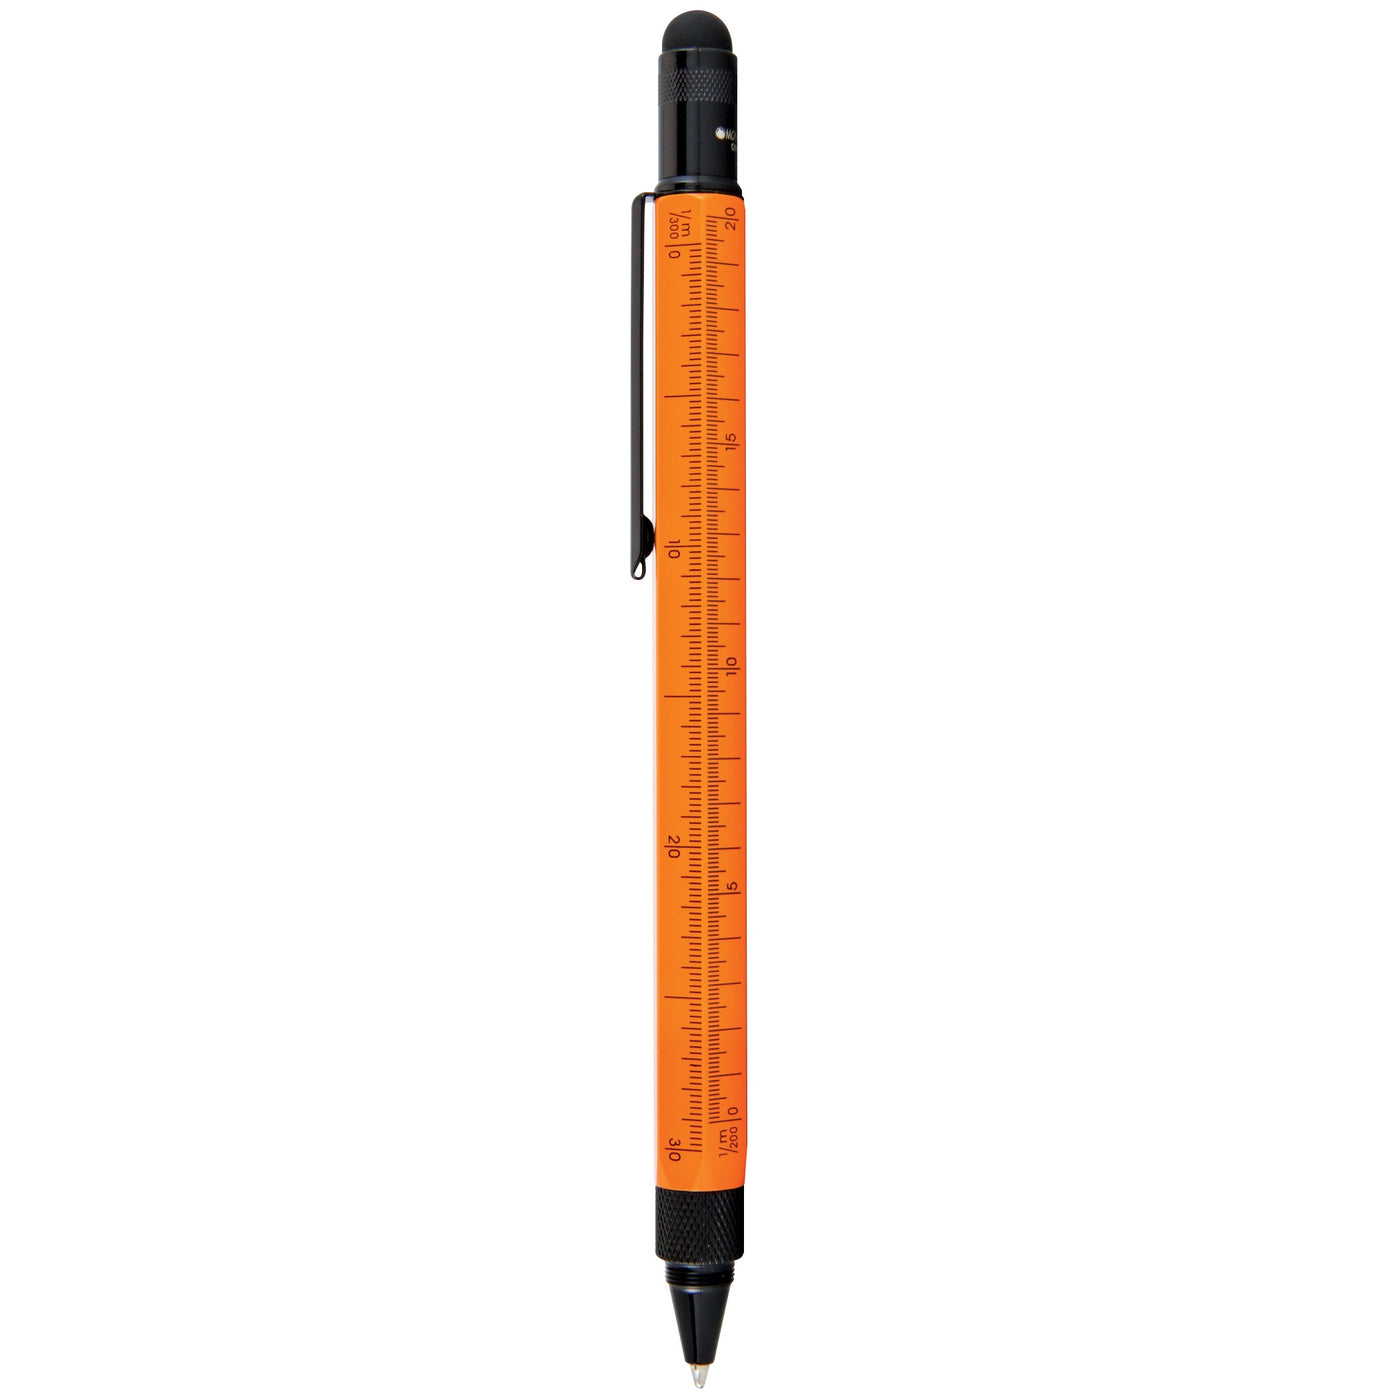 Monteverde One Touch Stylus Tool Orange and Black Ballpoint Pen